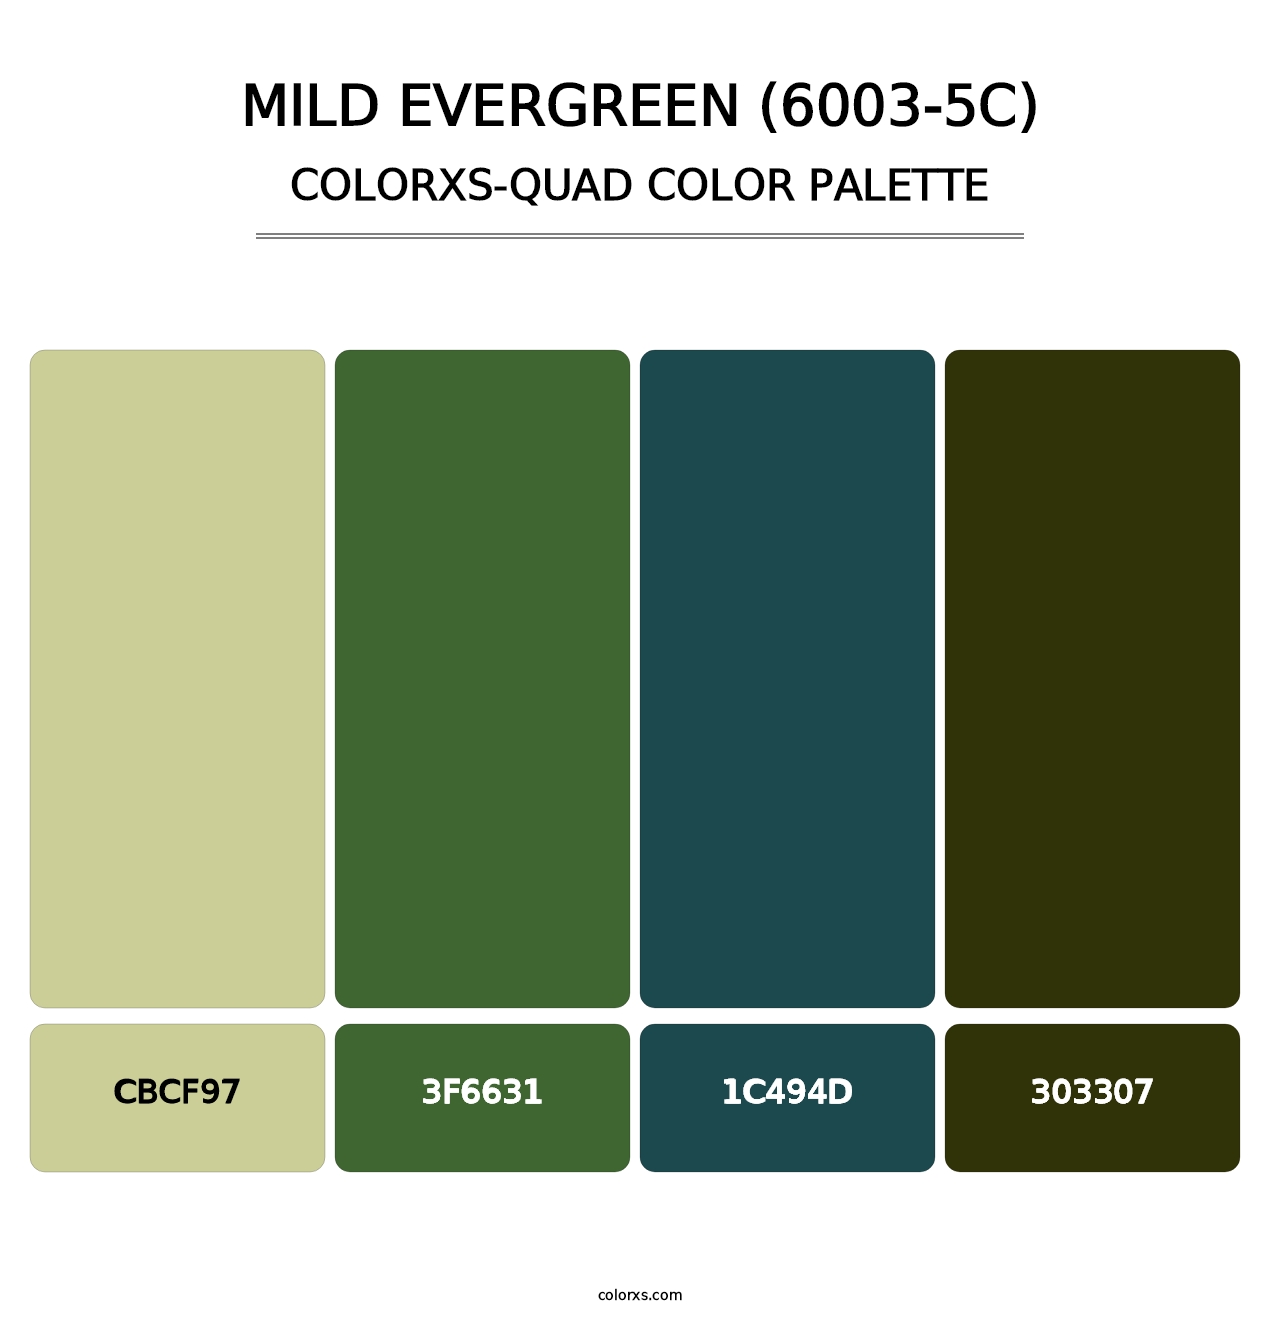 Mild Evergreen (6003-5C) - Colorxs Quad Palette